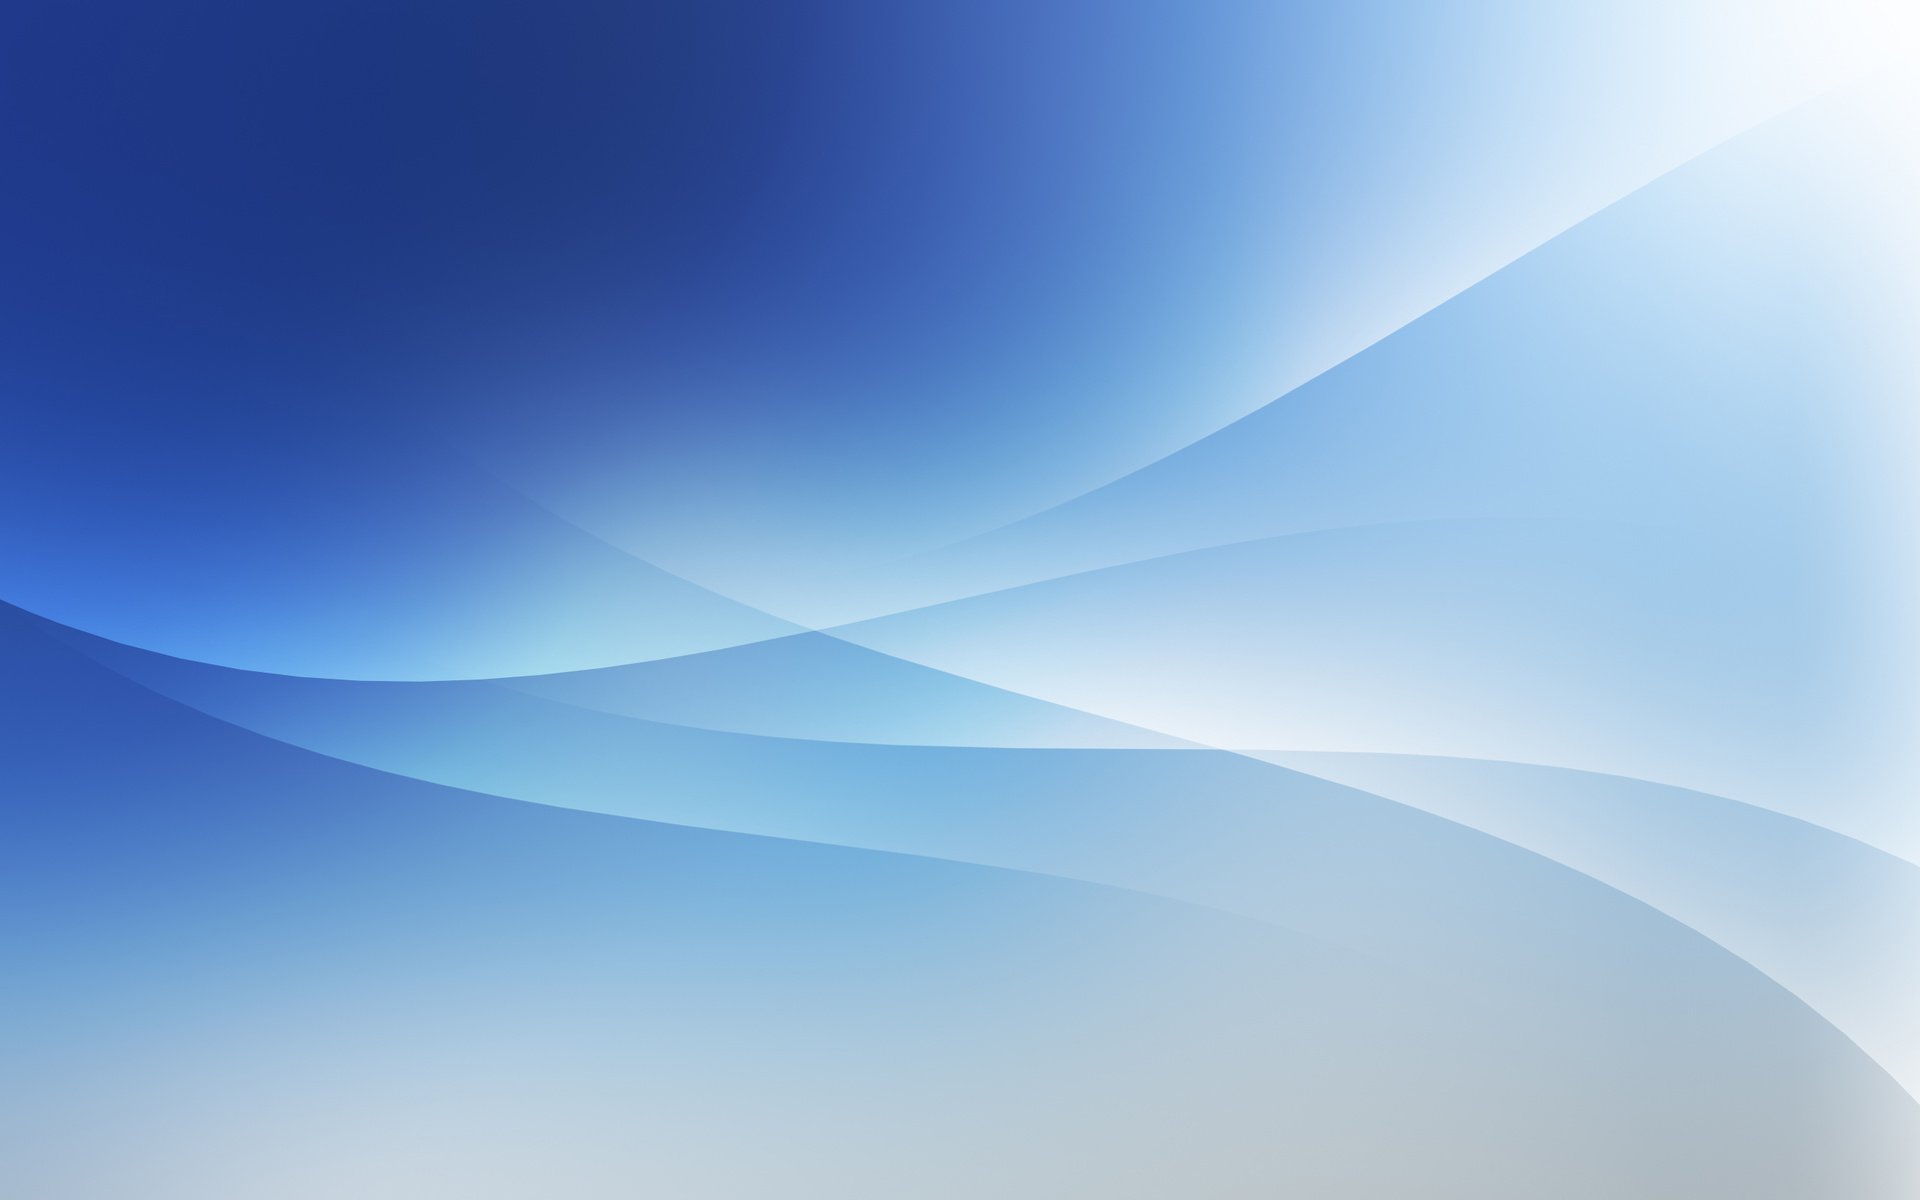 Скачать обои обои, текстура, голубой фон, 2560х1600, white & blue  wallpapers разрешение 1920x1200 #13865